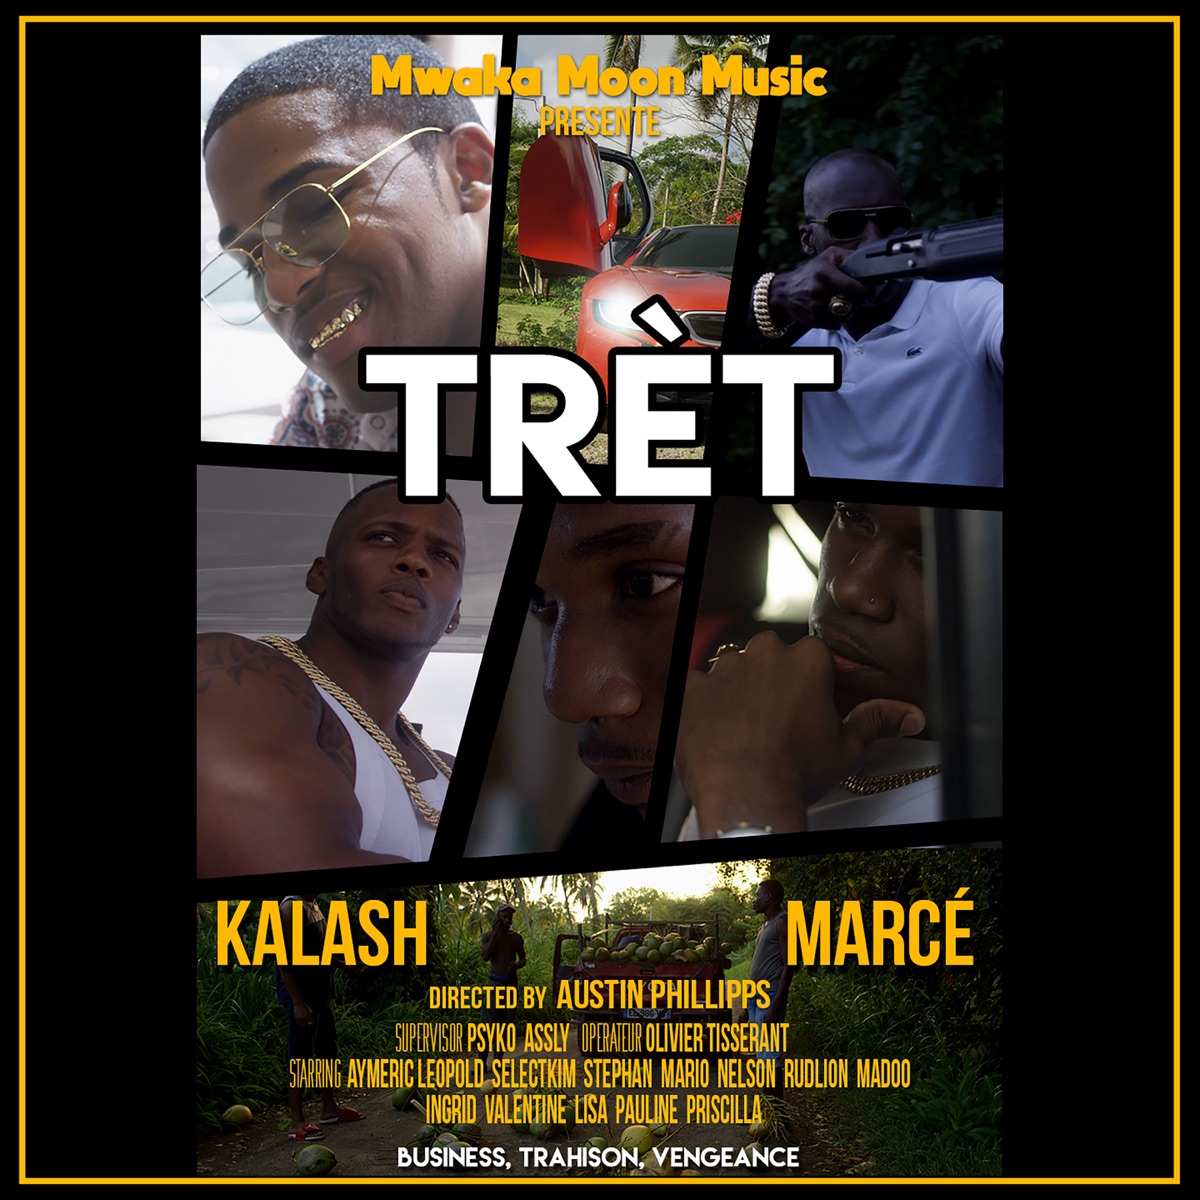 Trèt - Single by Kalash on Apple Music